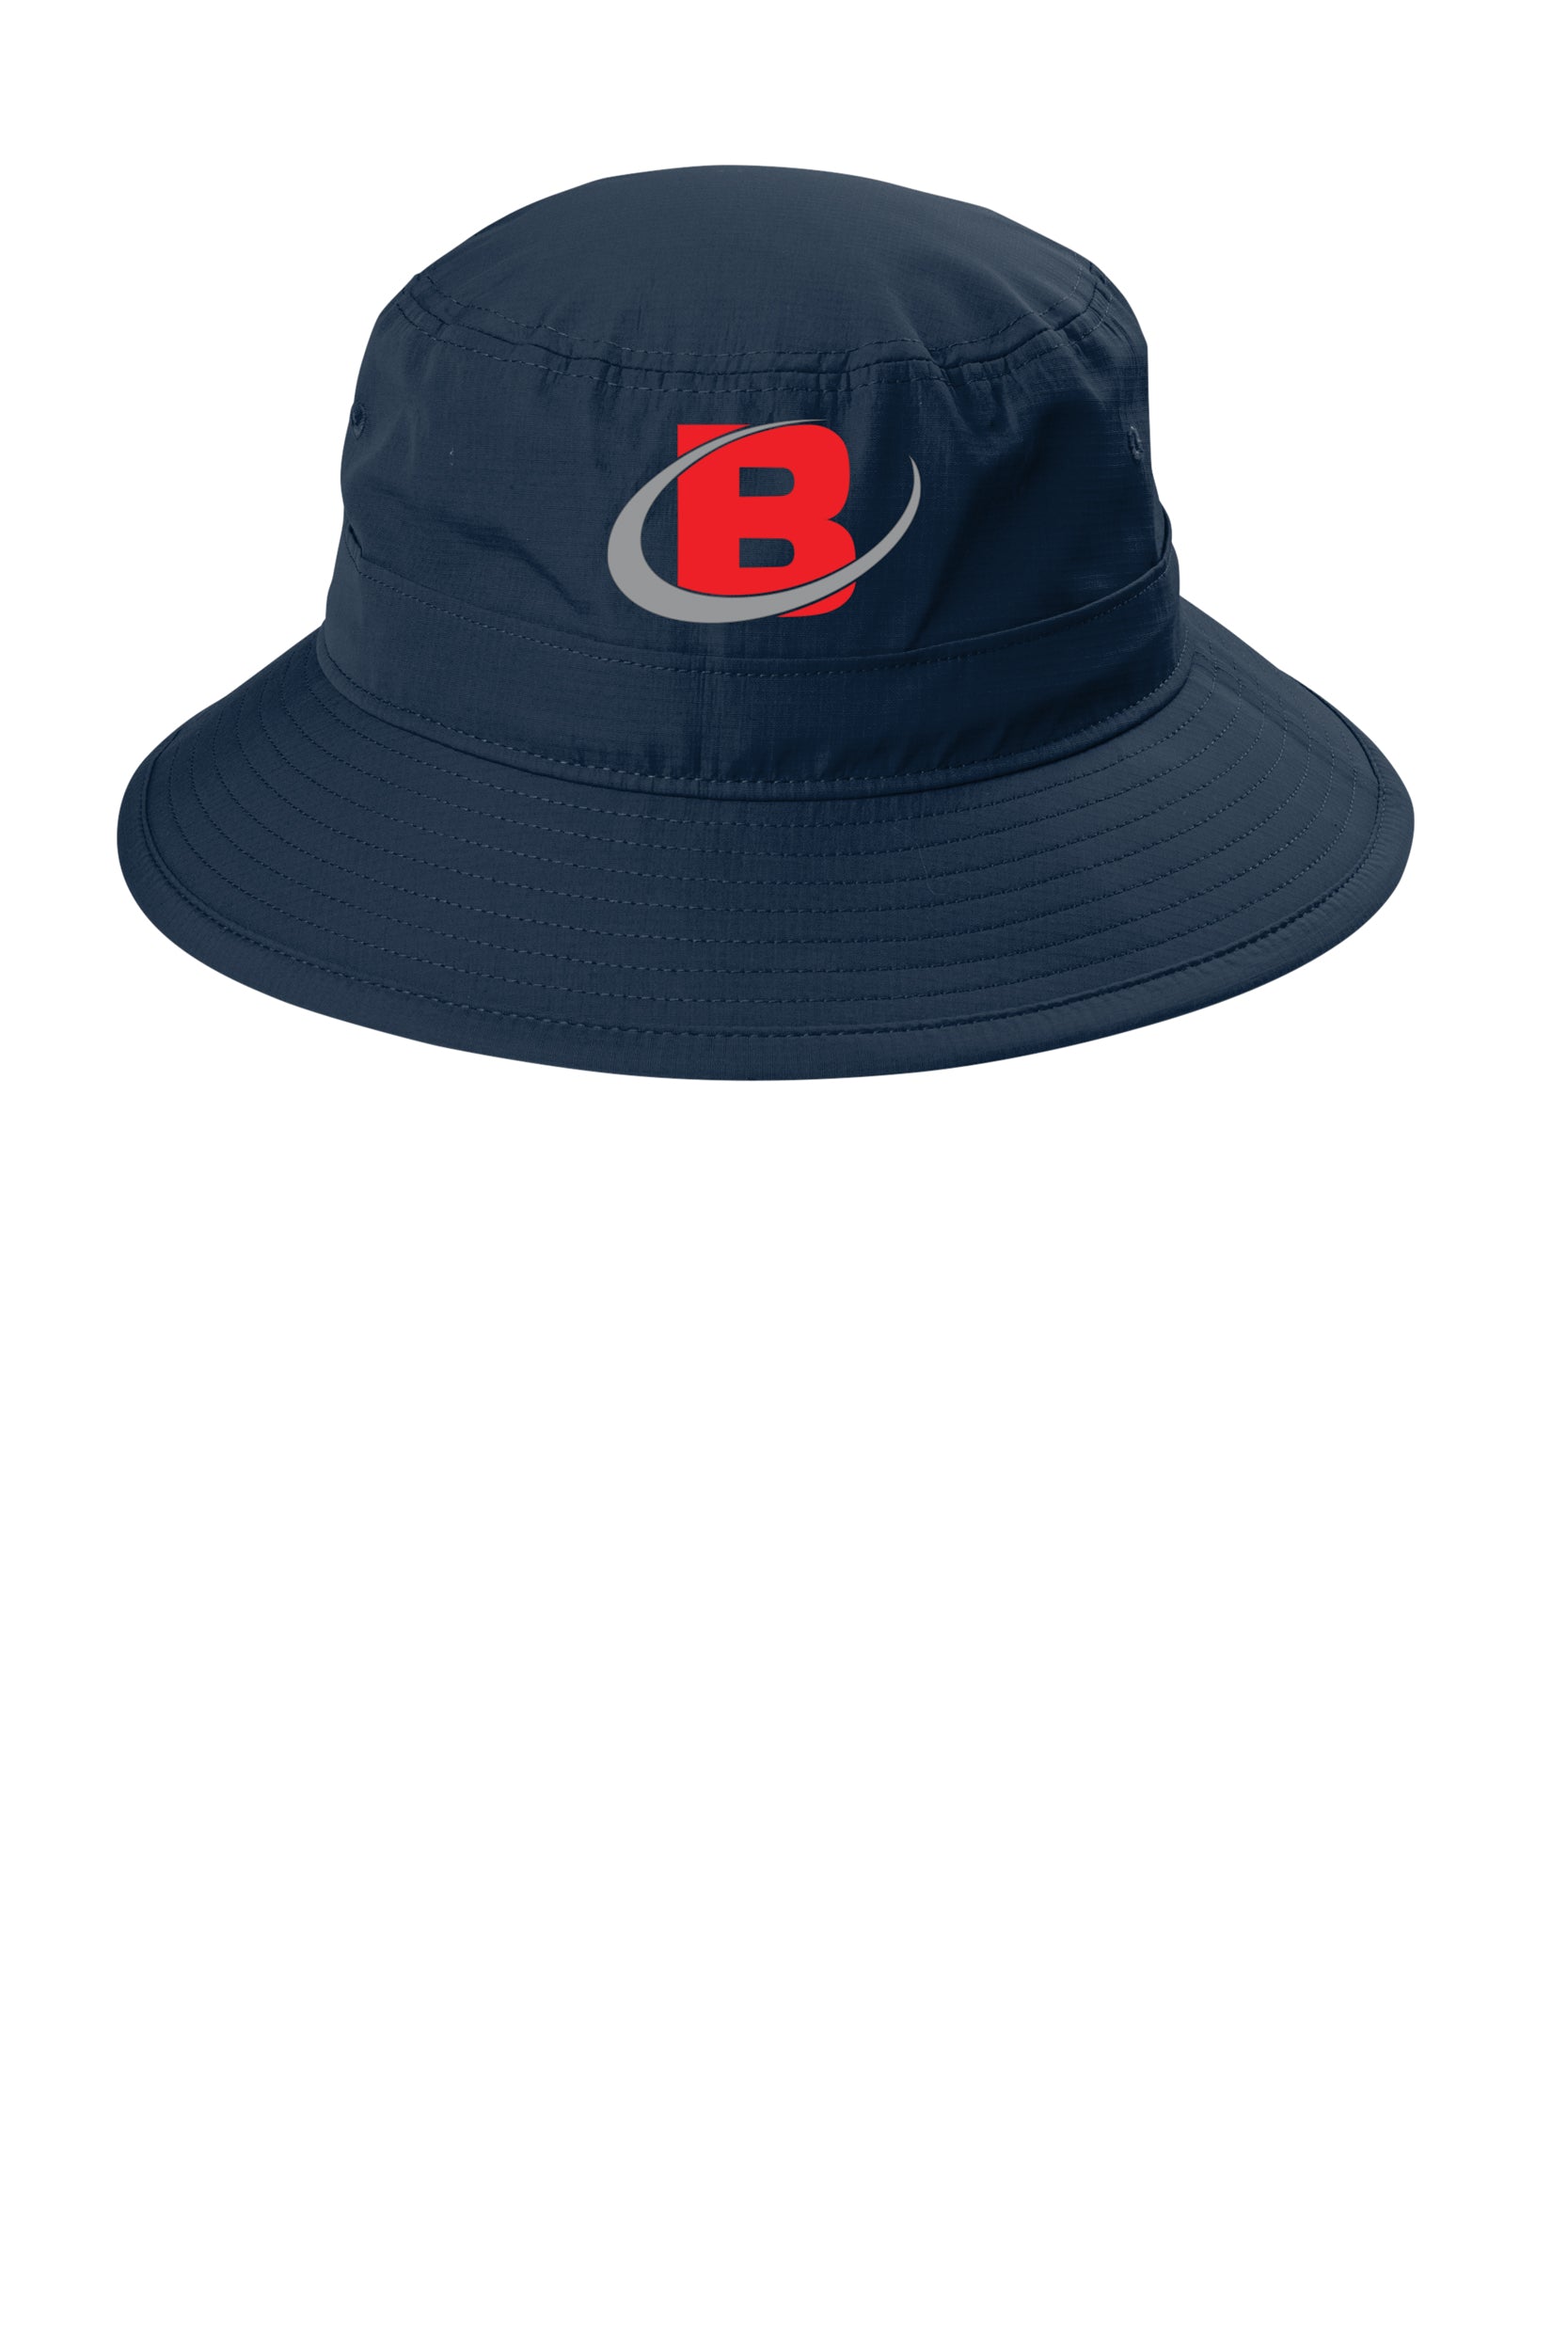 Bowman Excavating - Bucket Hat